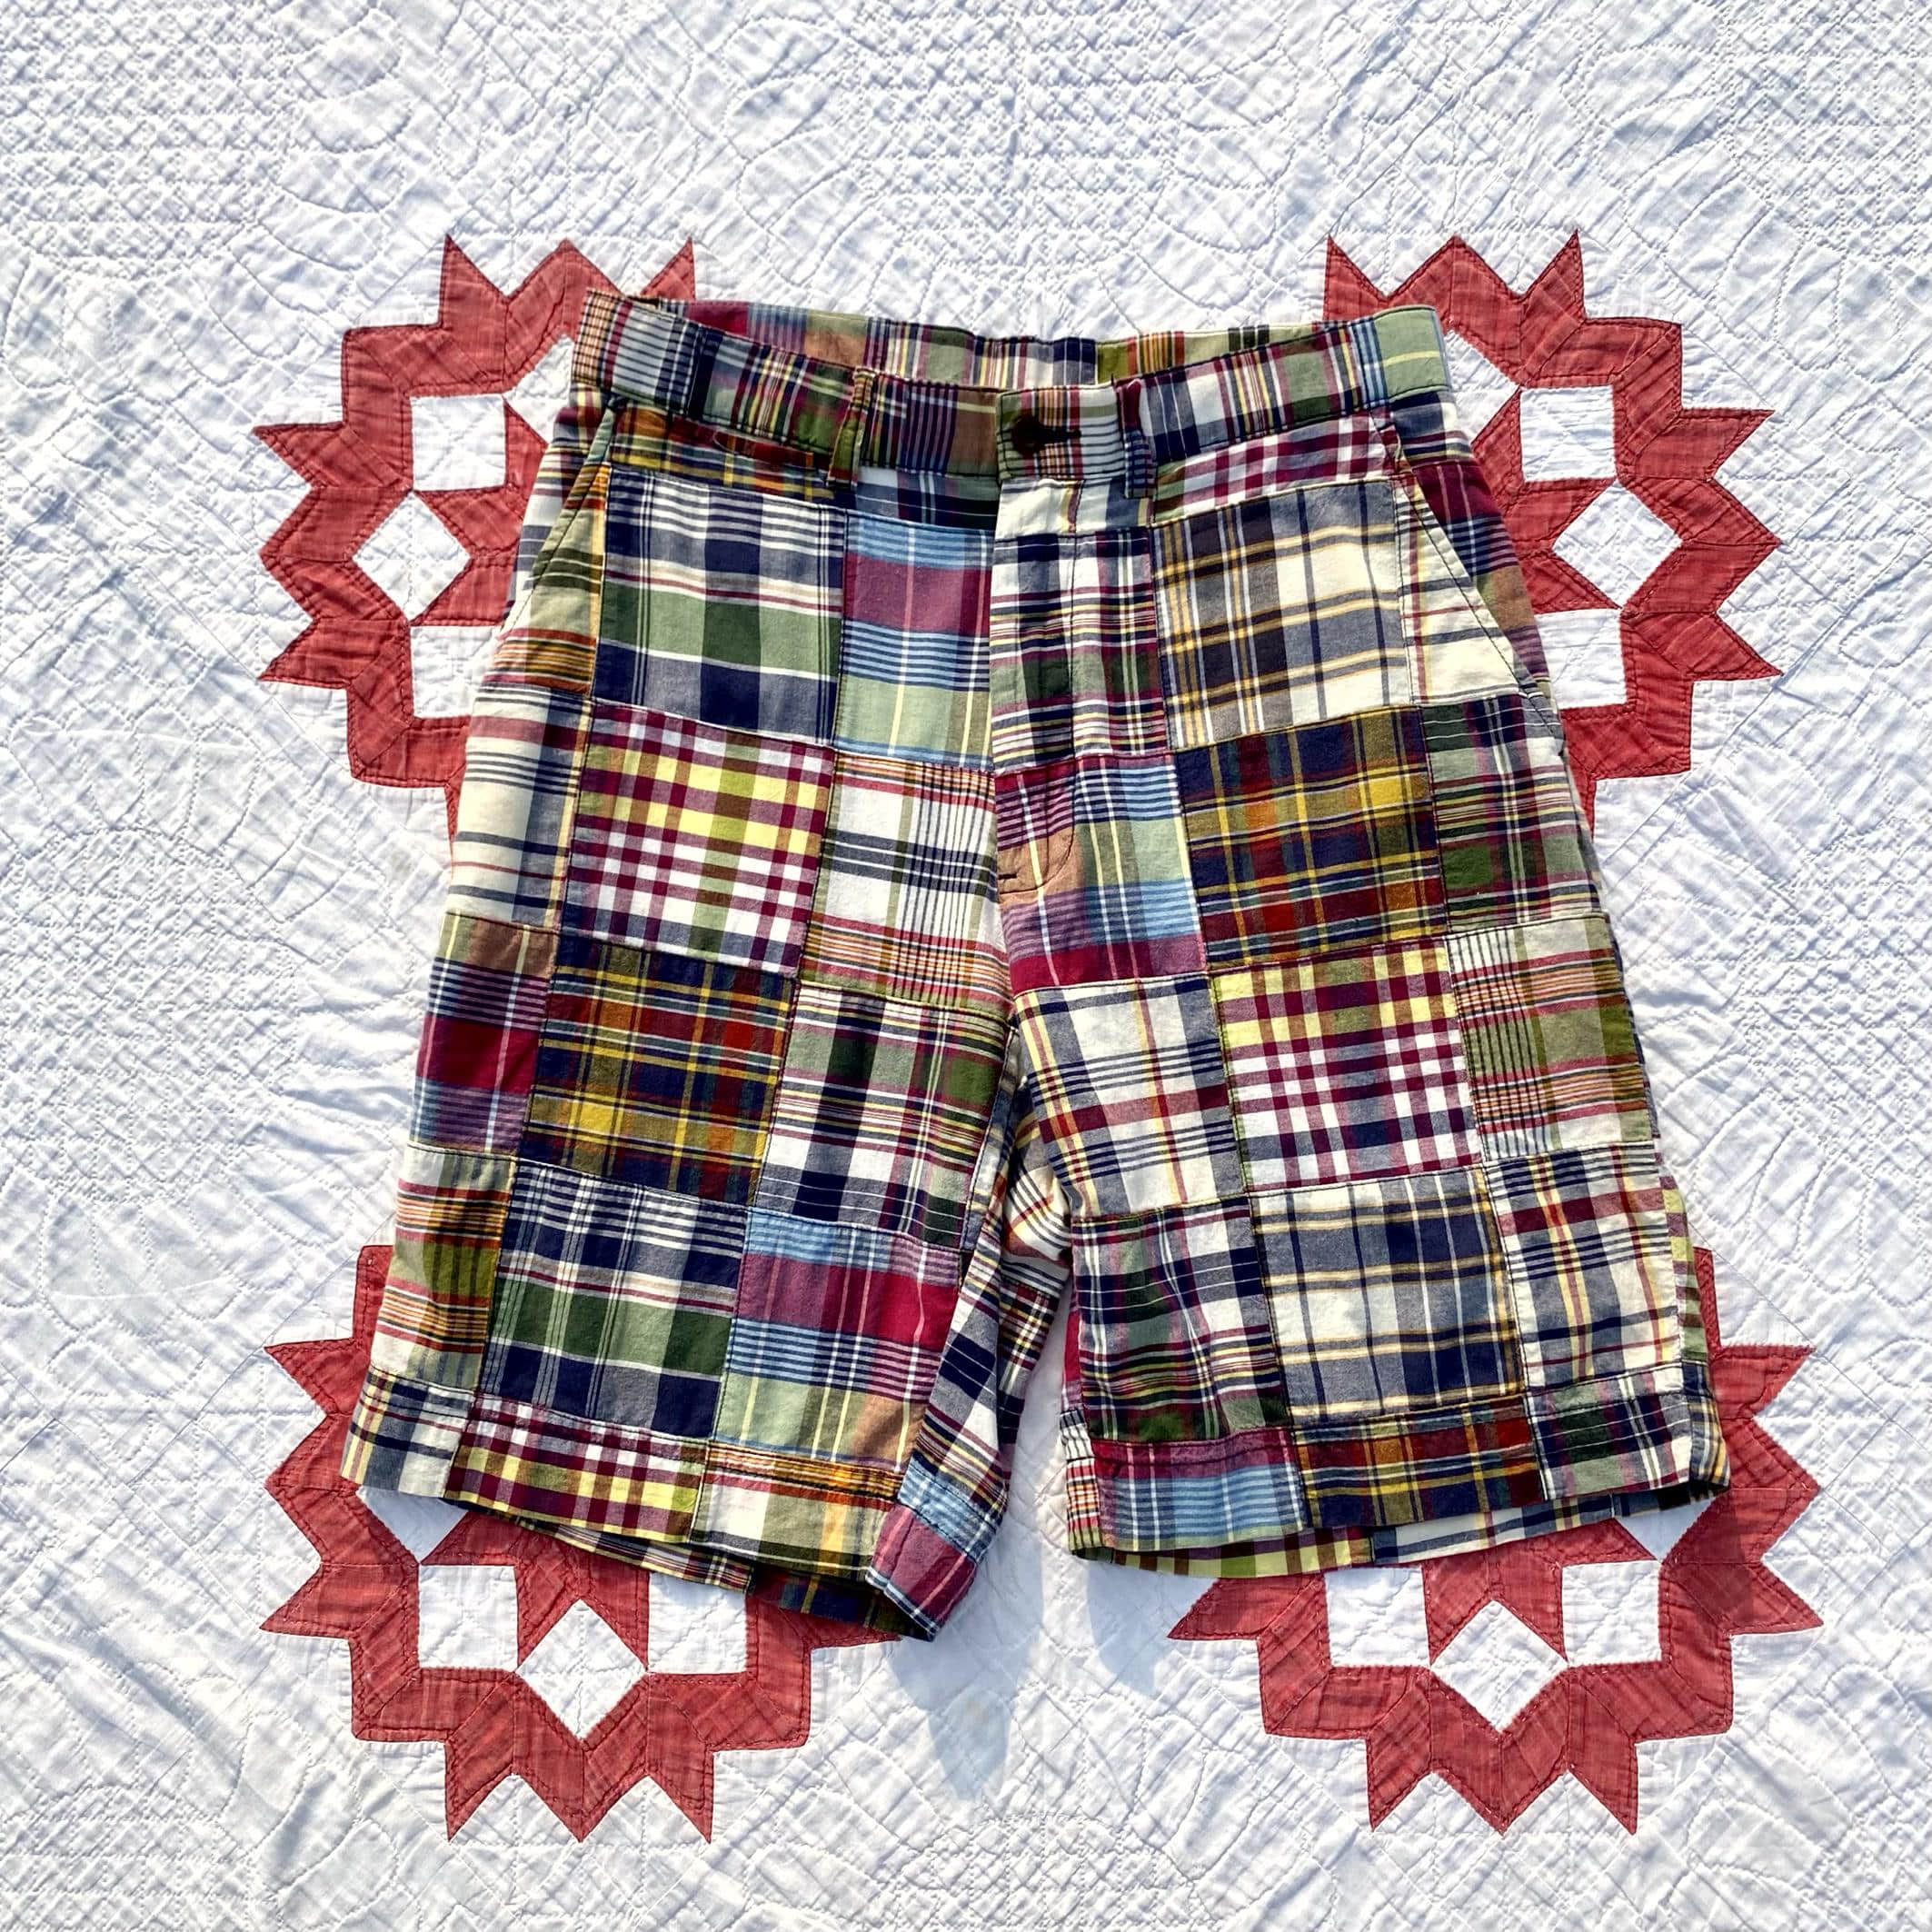 Polo Ralph Lauren Madras Check Patchwork Shorts 29 Size - 체리피커